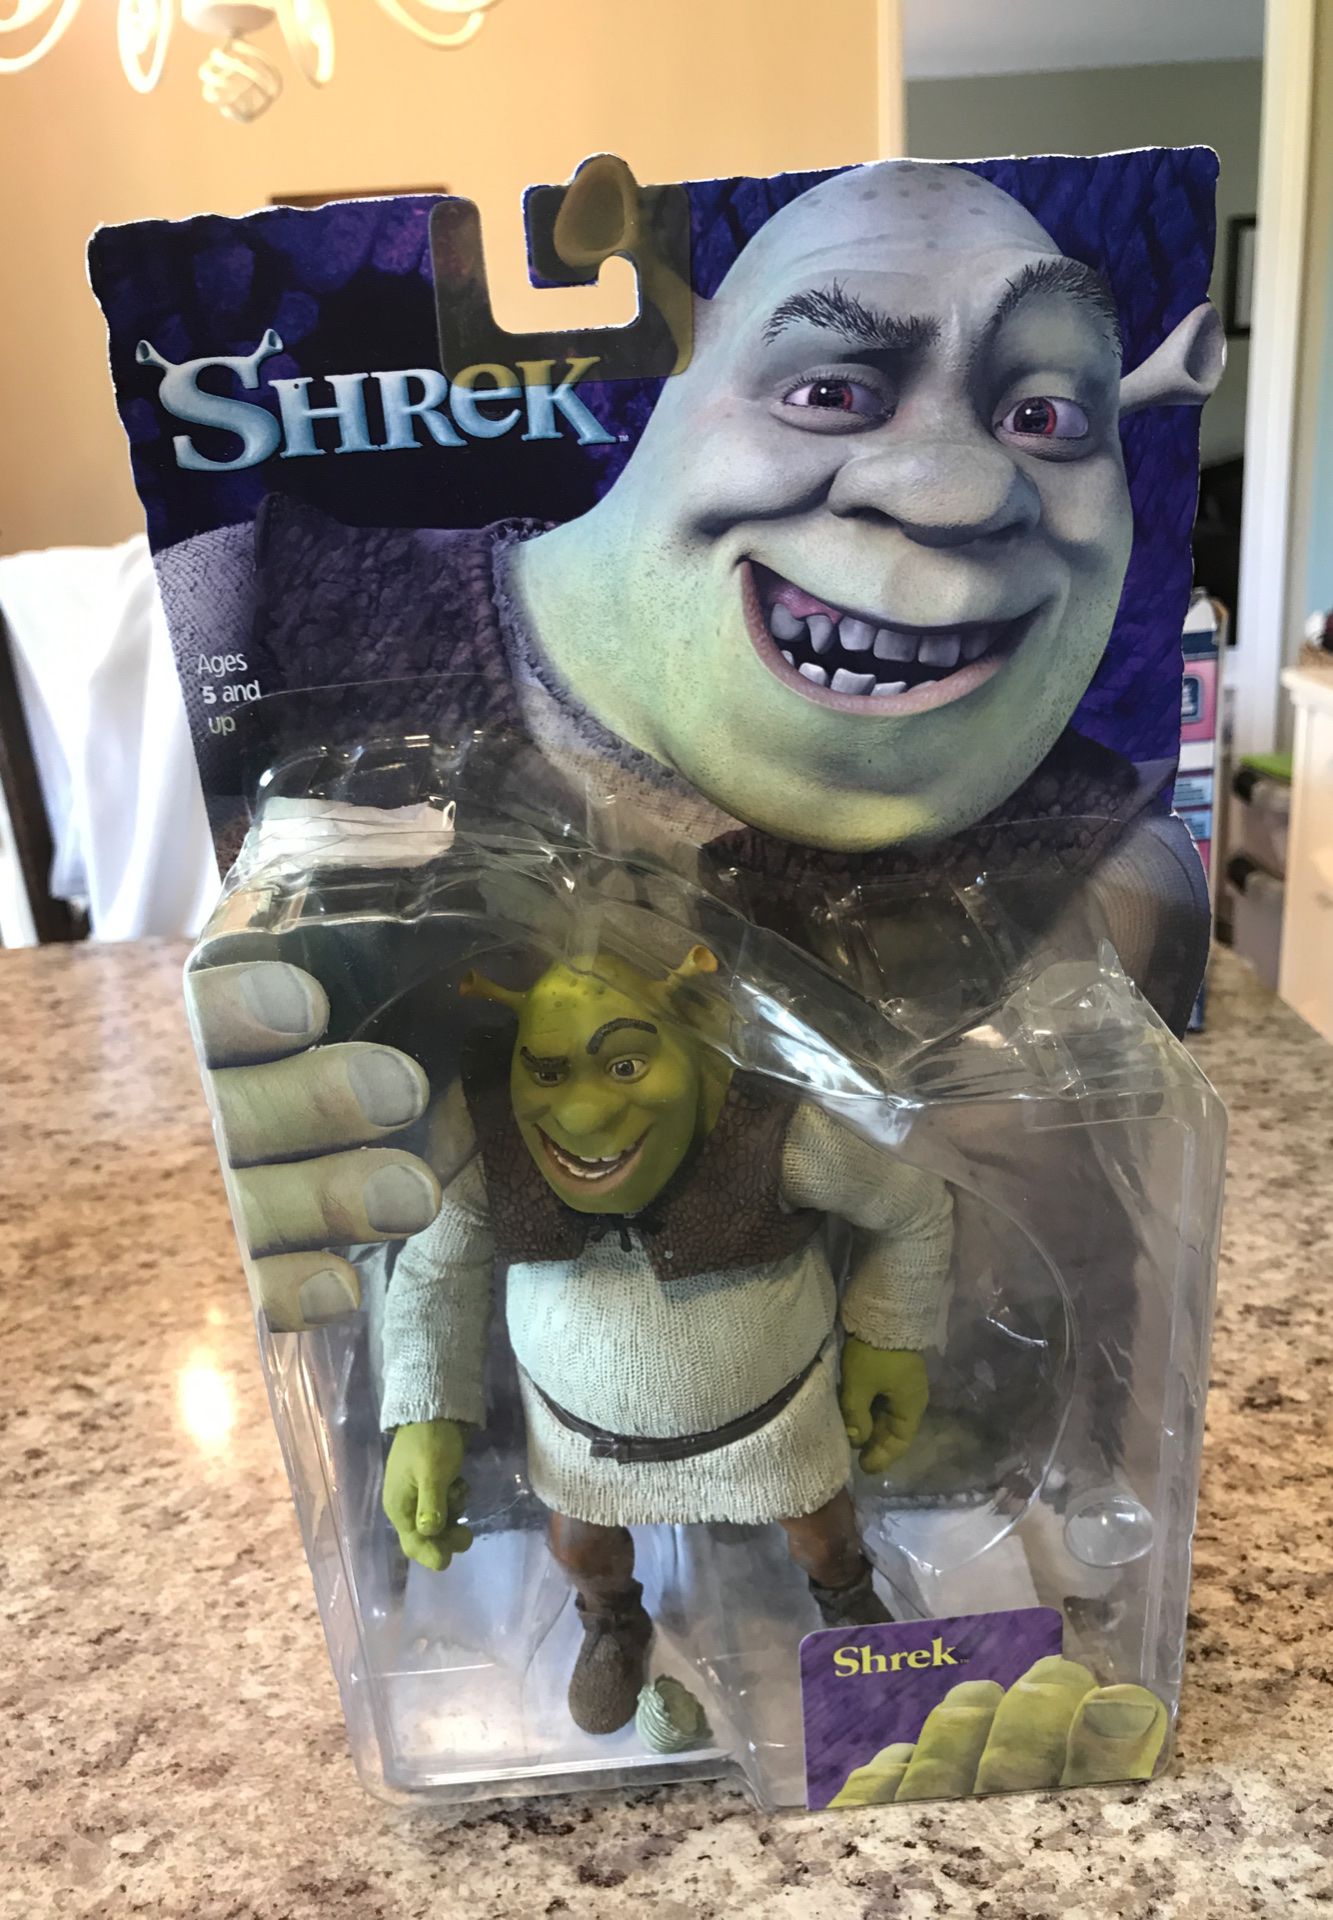 Shrek collectible figure by Mcfarlane toys